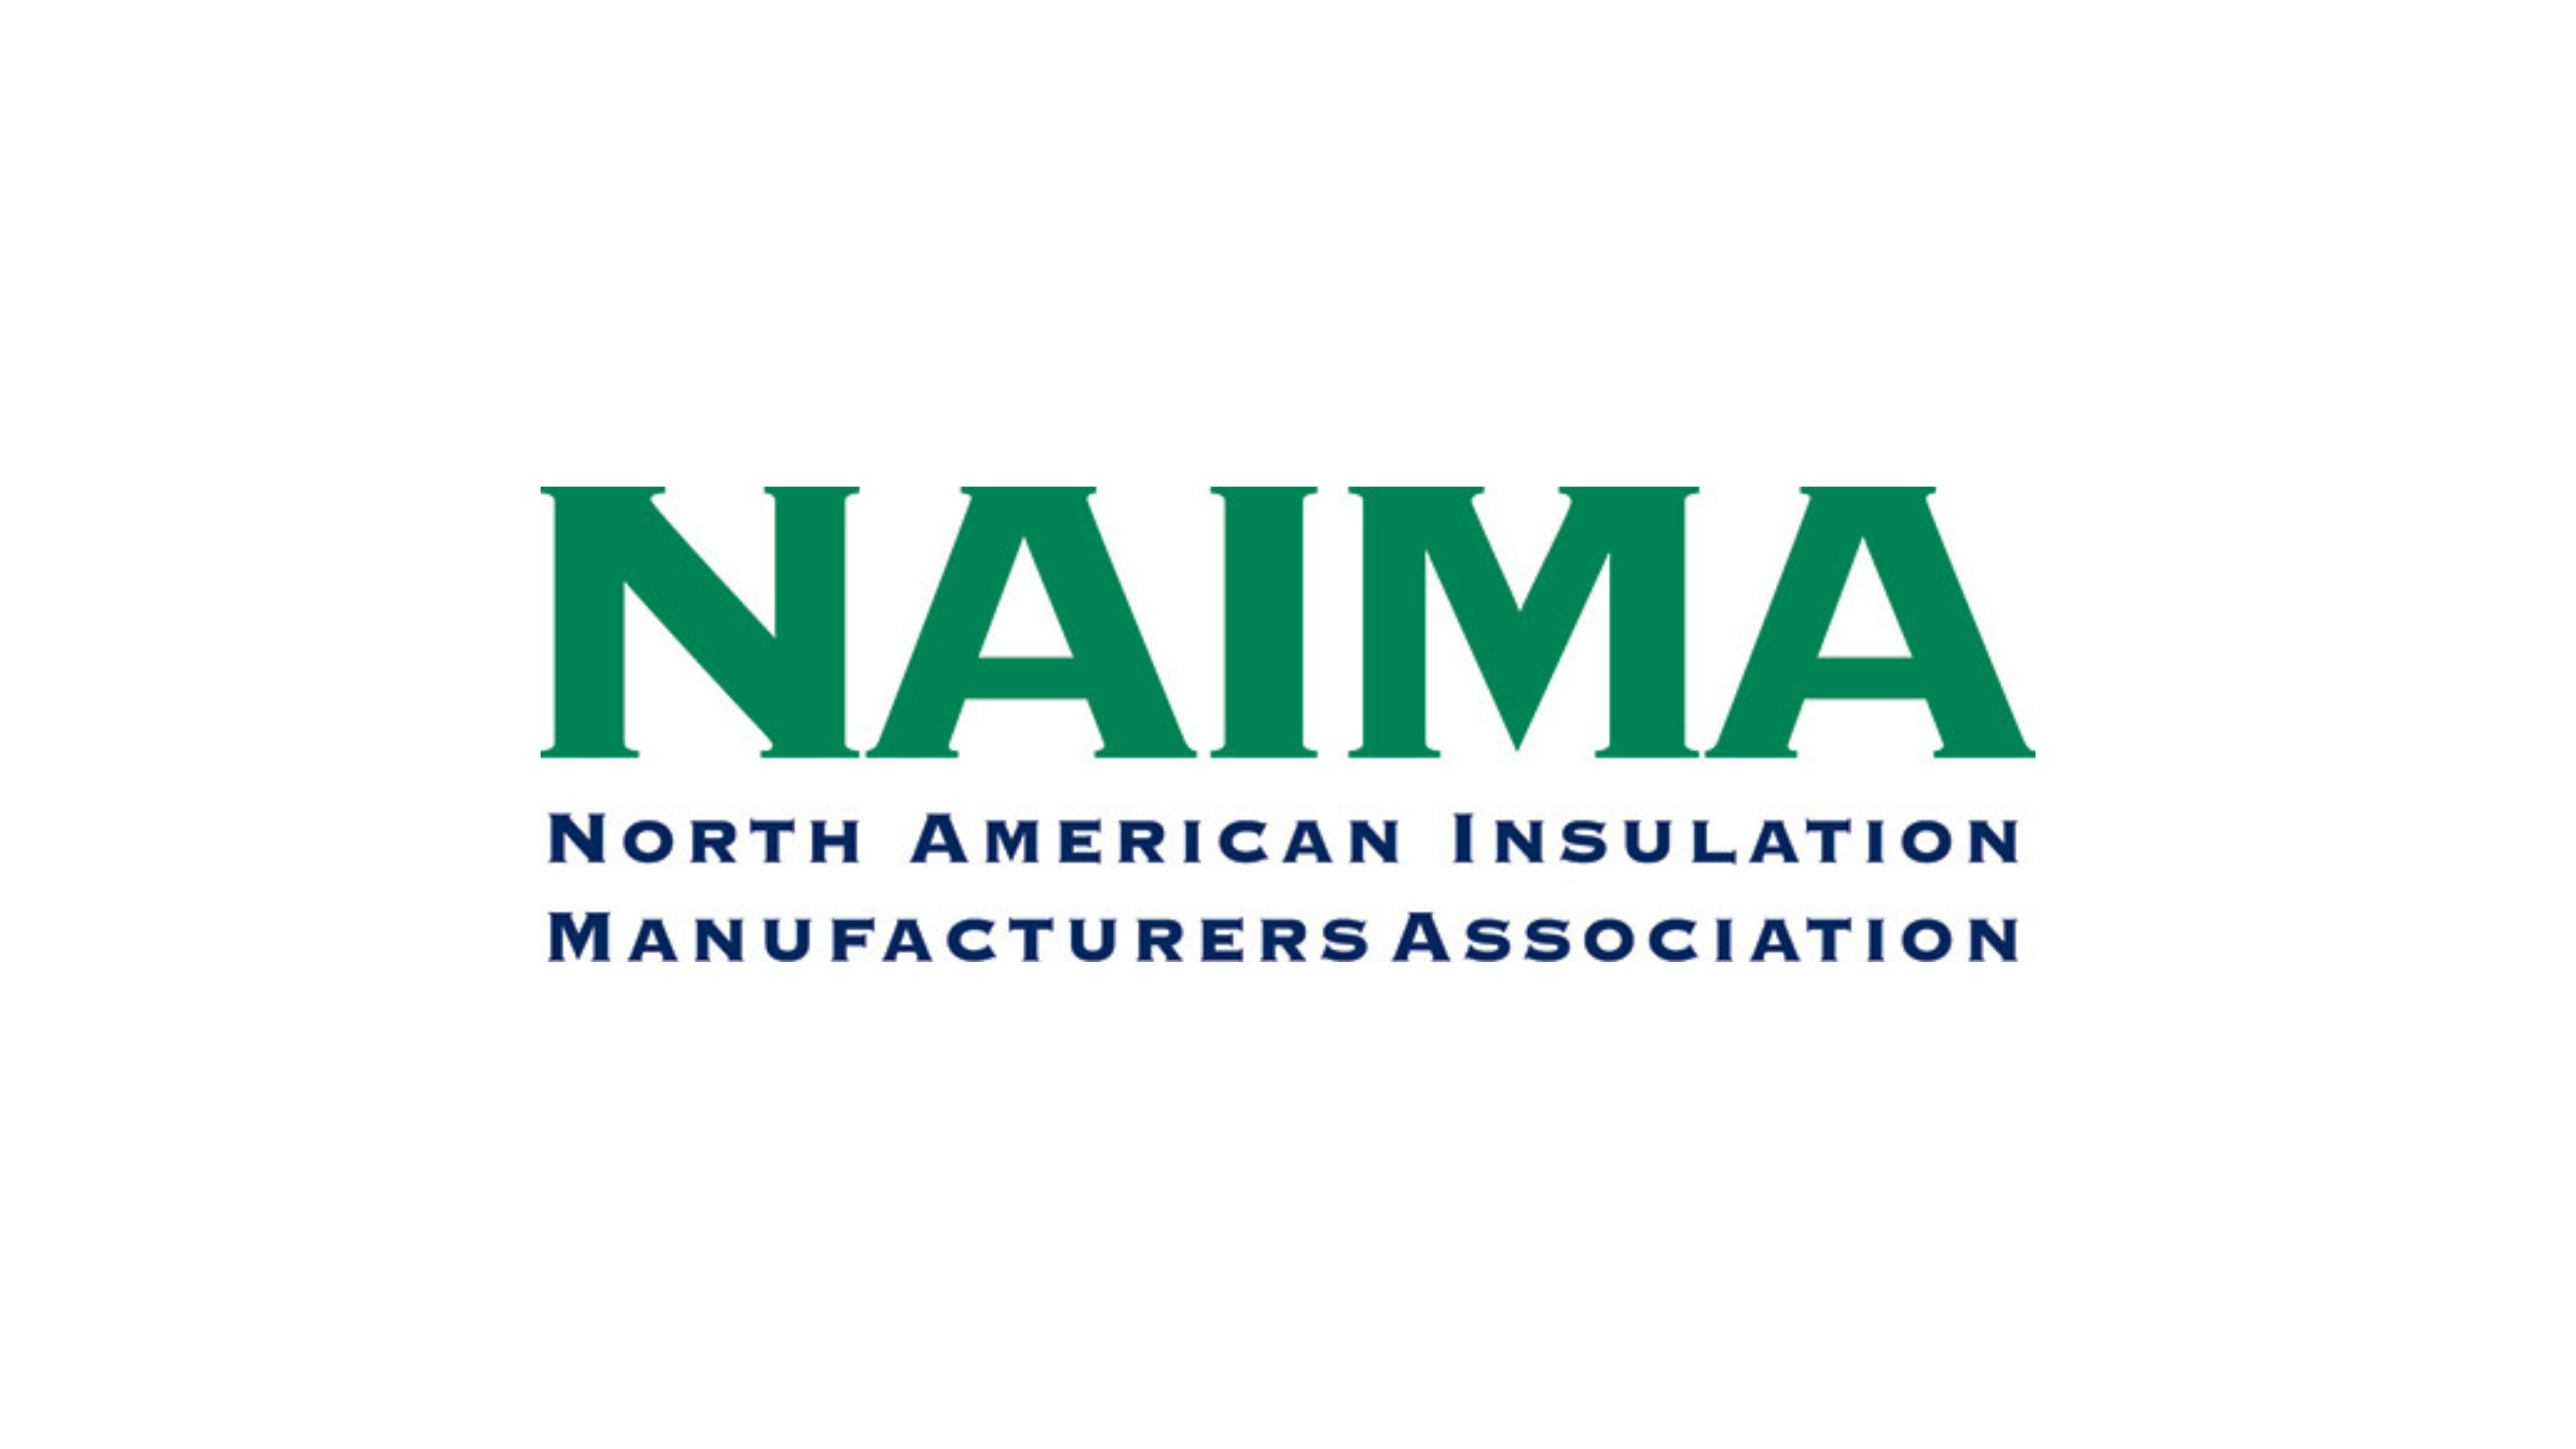 NAIMA (North American Insulation Manufacturers Association)